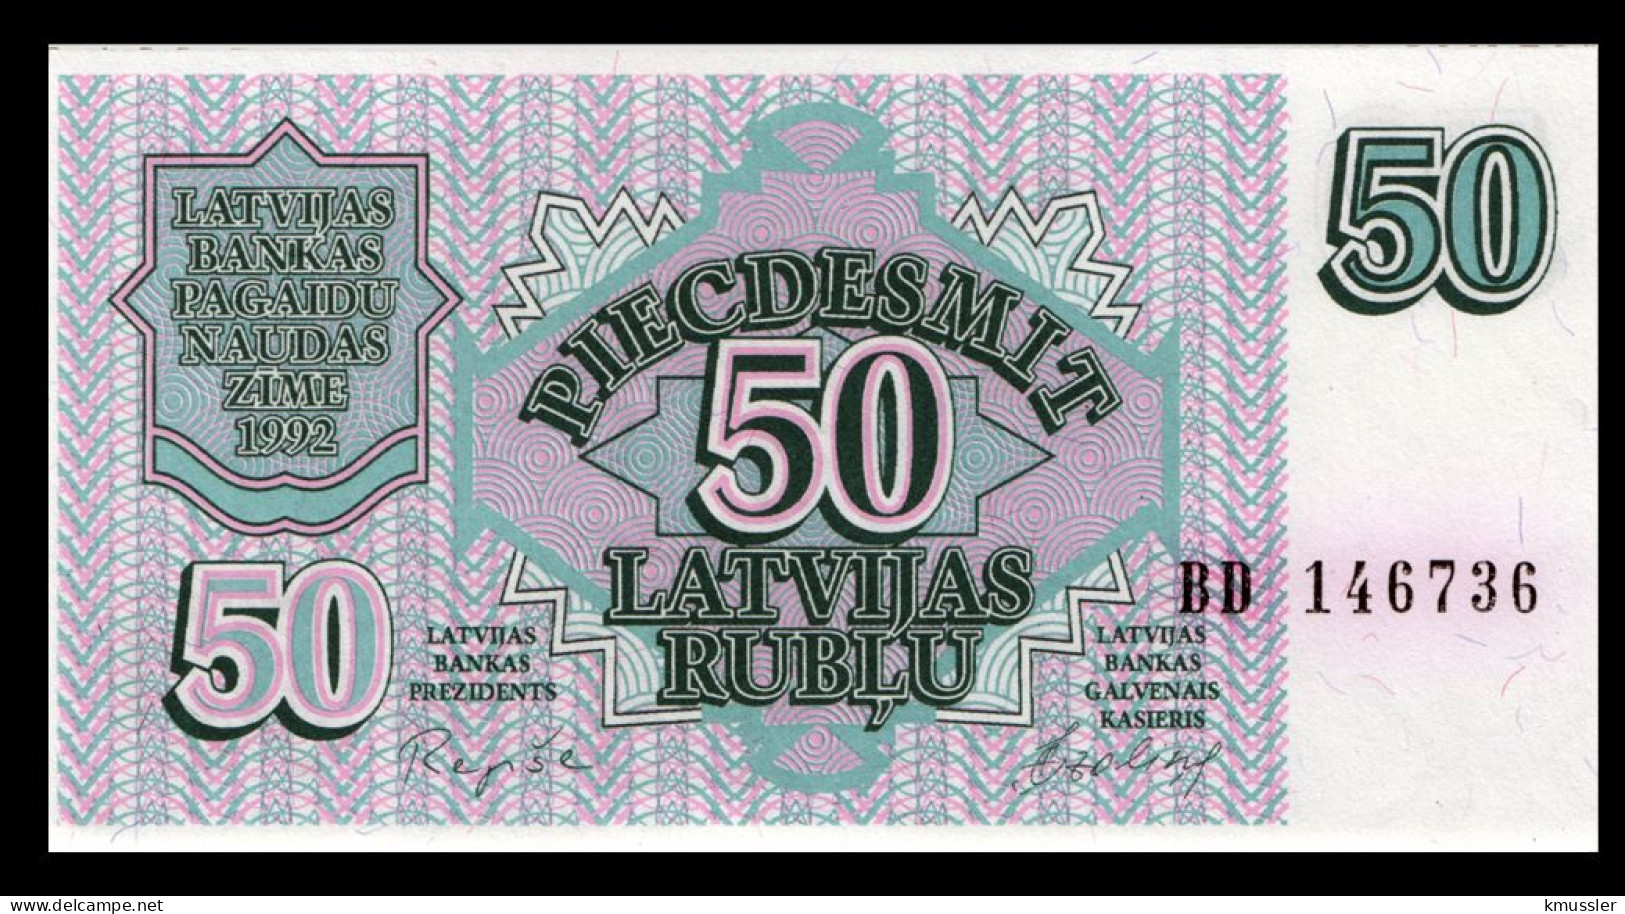 # # # Banknote Lettland (Latvijas) 50 Rubel (Rublis) 1992 UNC # # # - Letonia